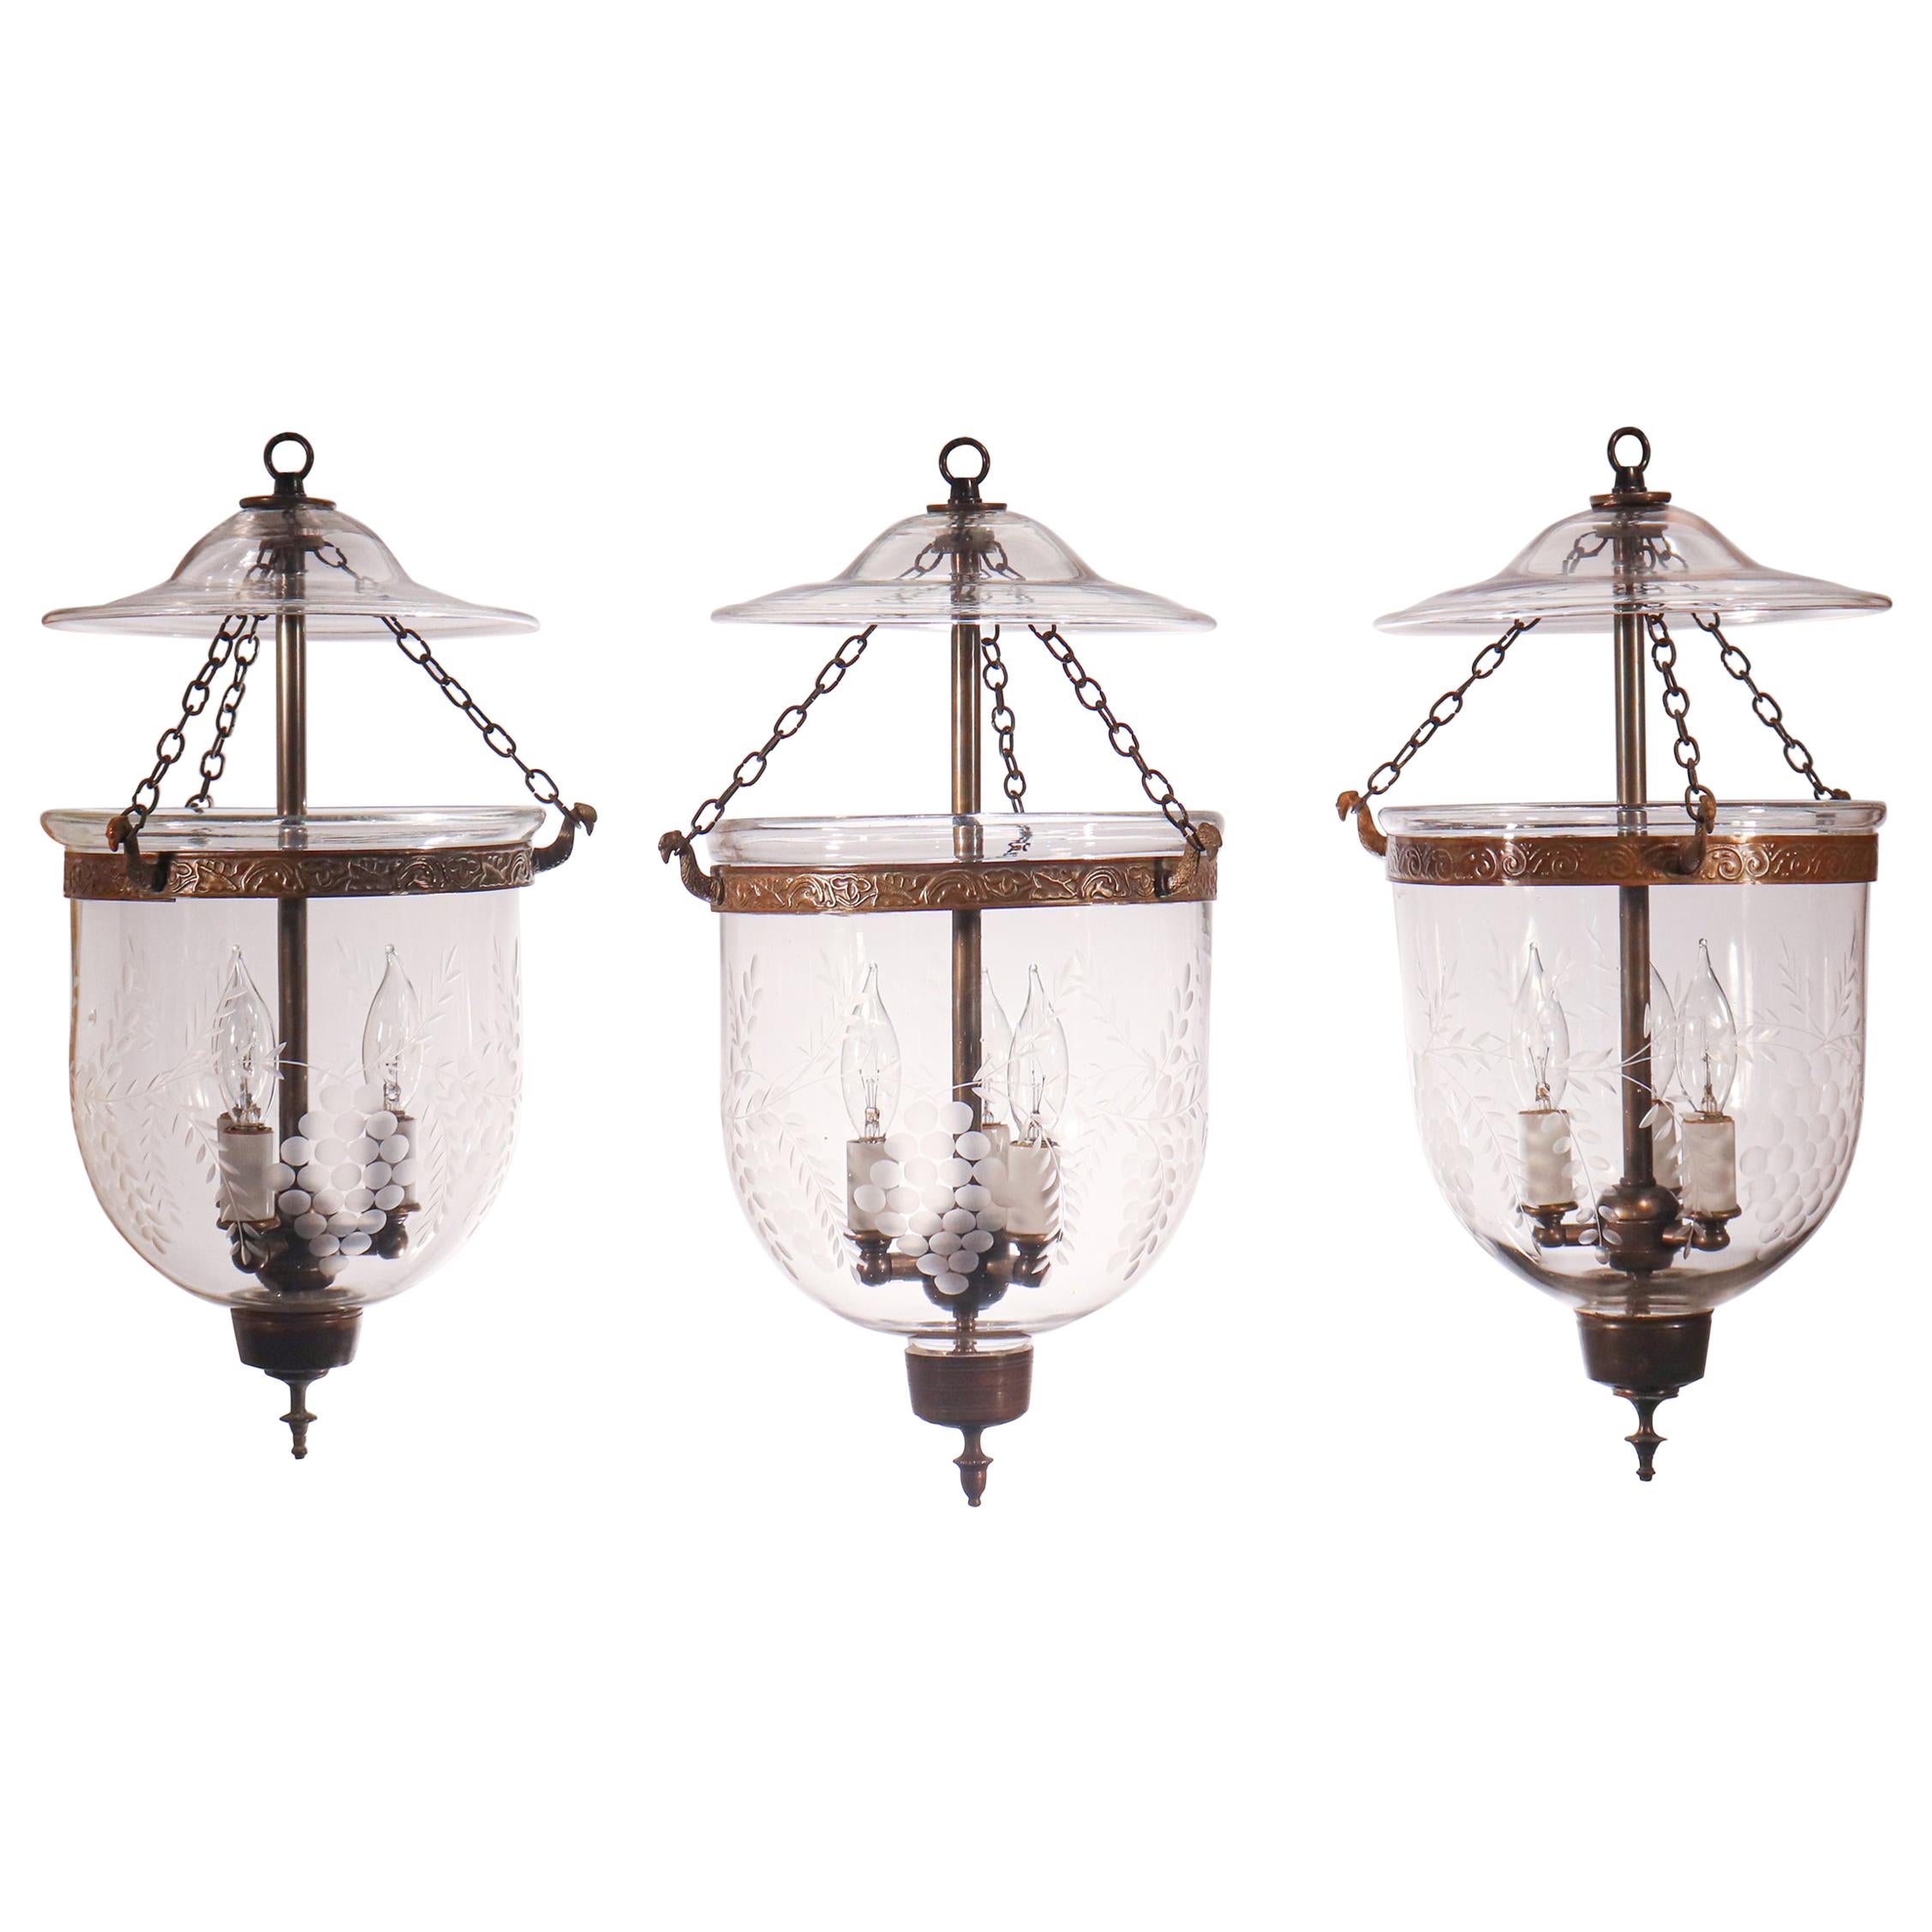 Set of Antique Petite Bell Jar Lanterns with Grape Etching